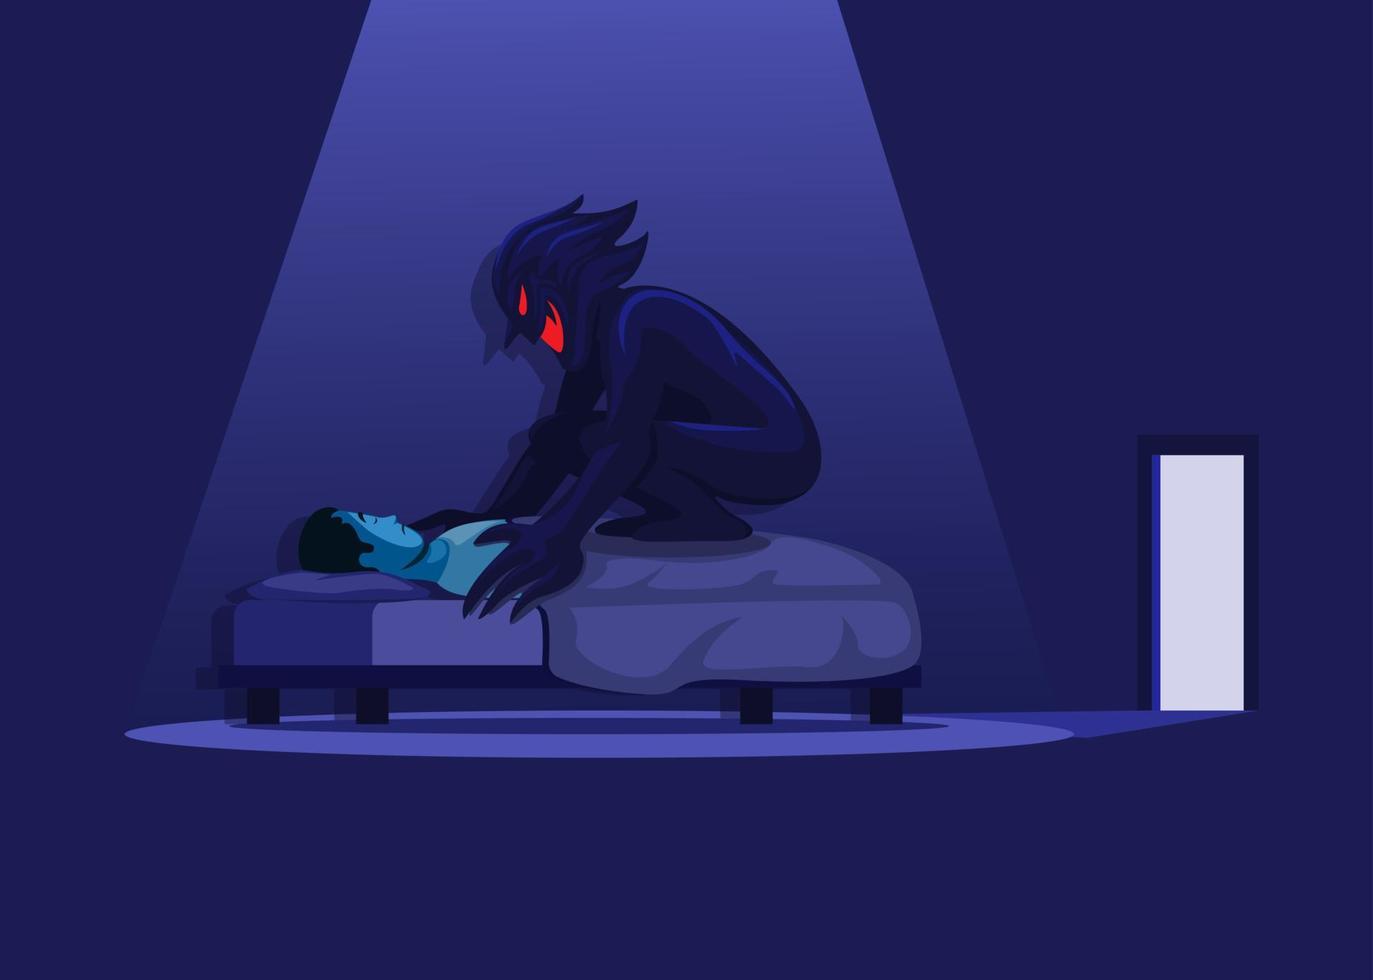 Sleep Paralysis with Demon in bed. nightmare horror scene illustration vector